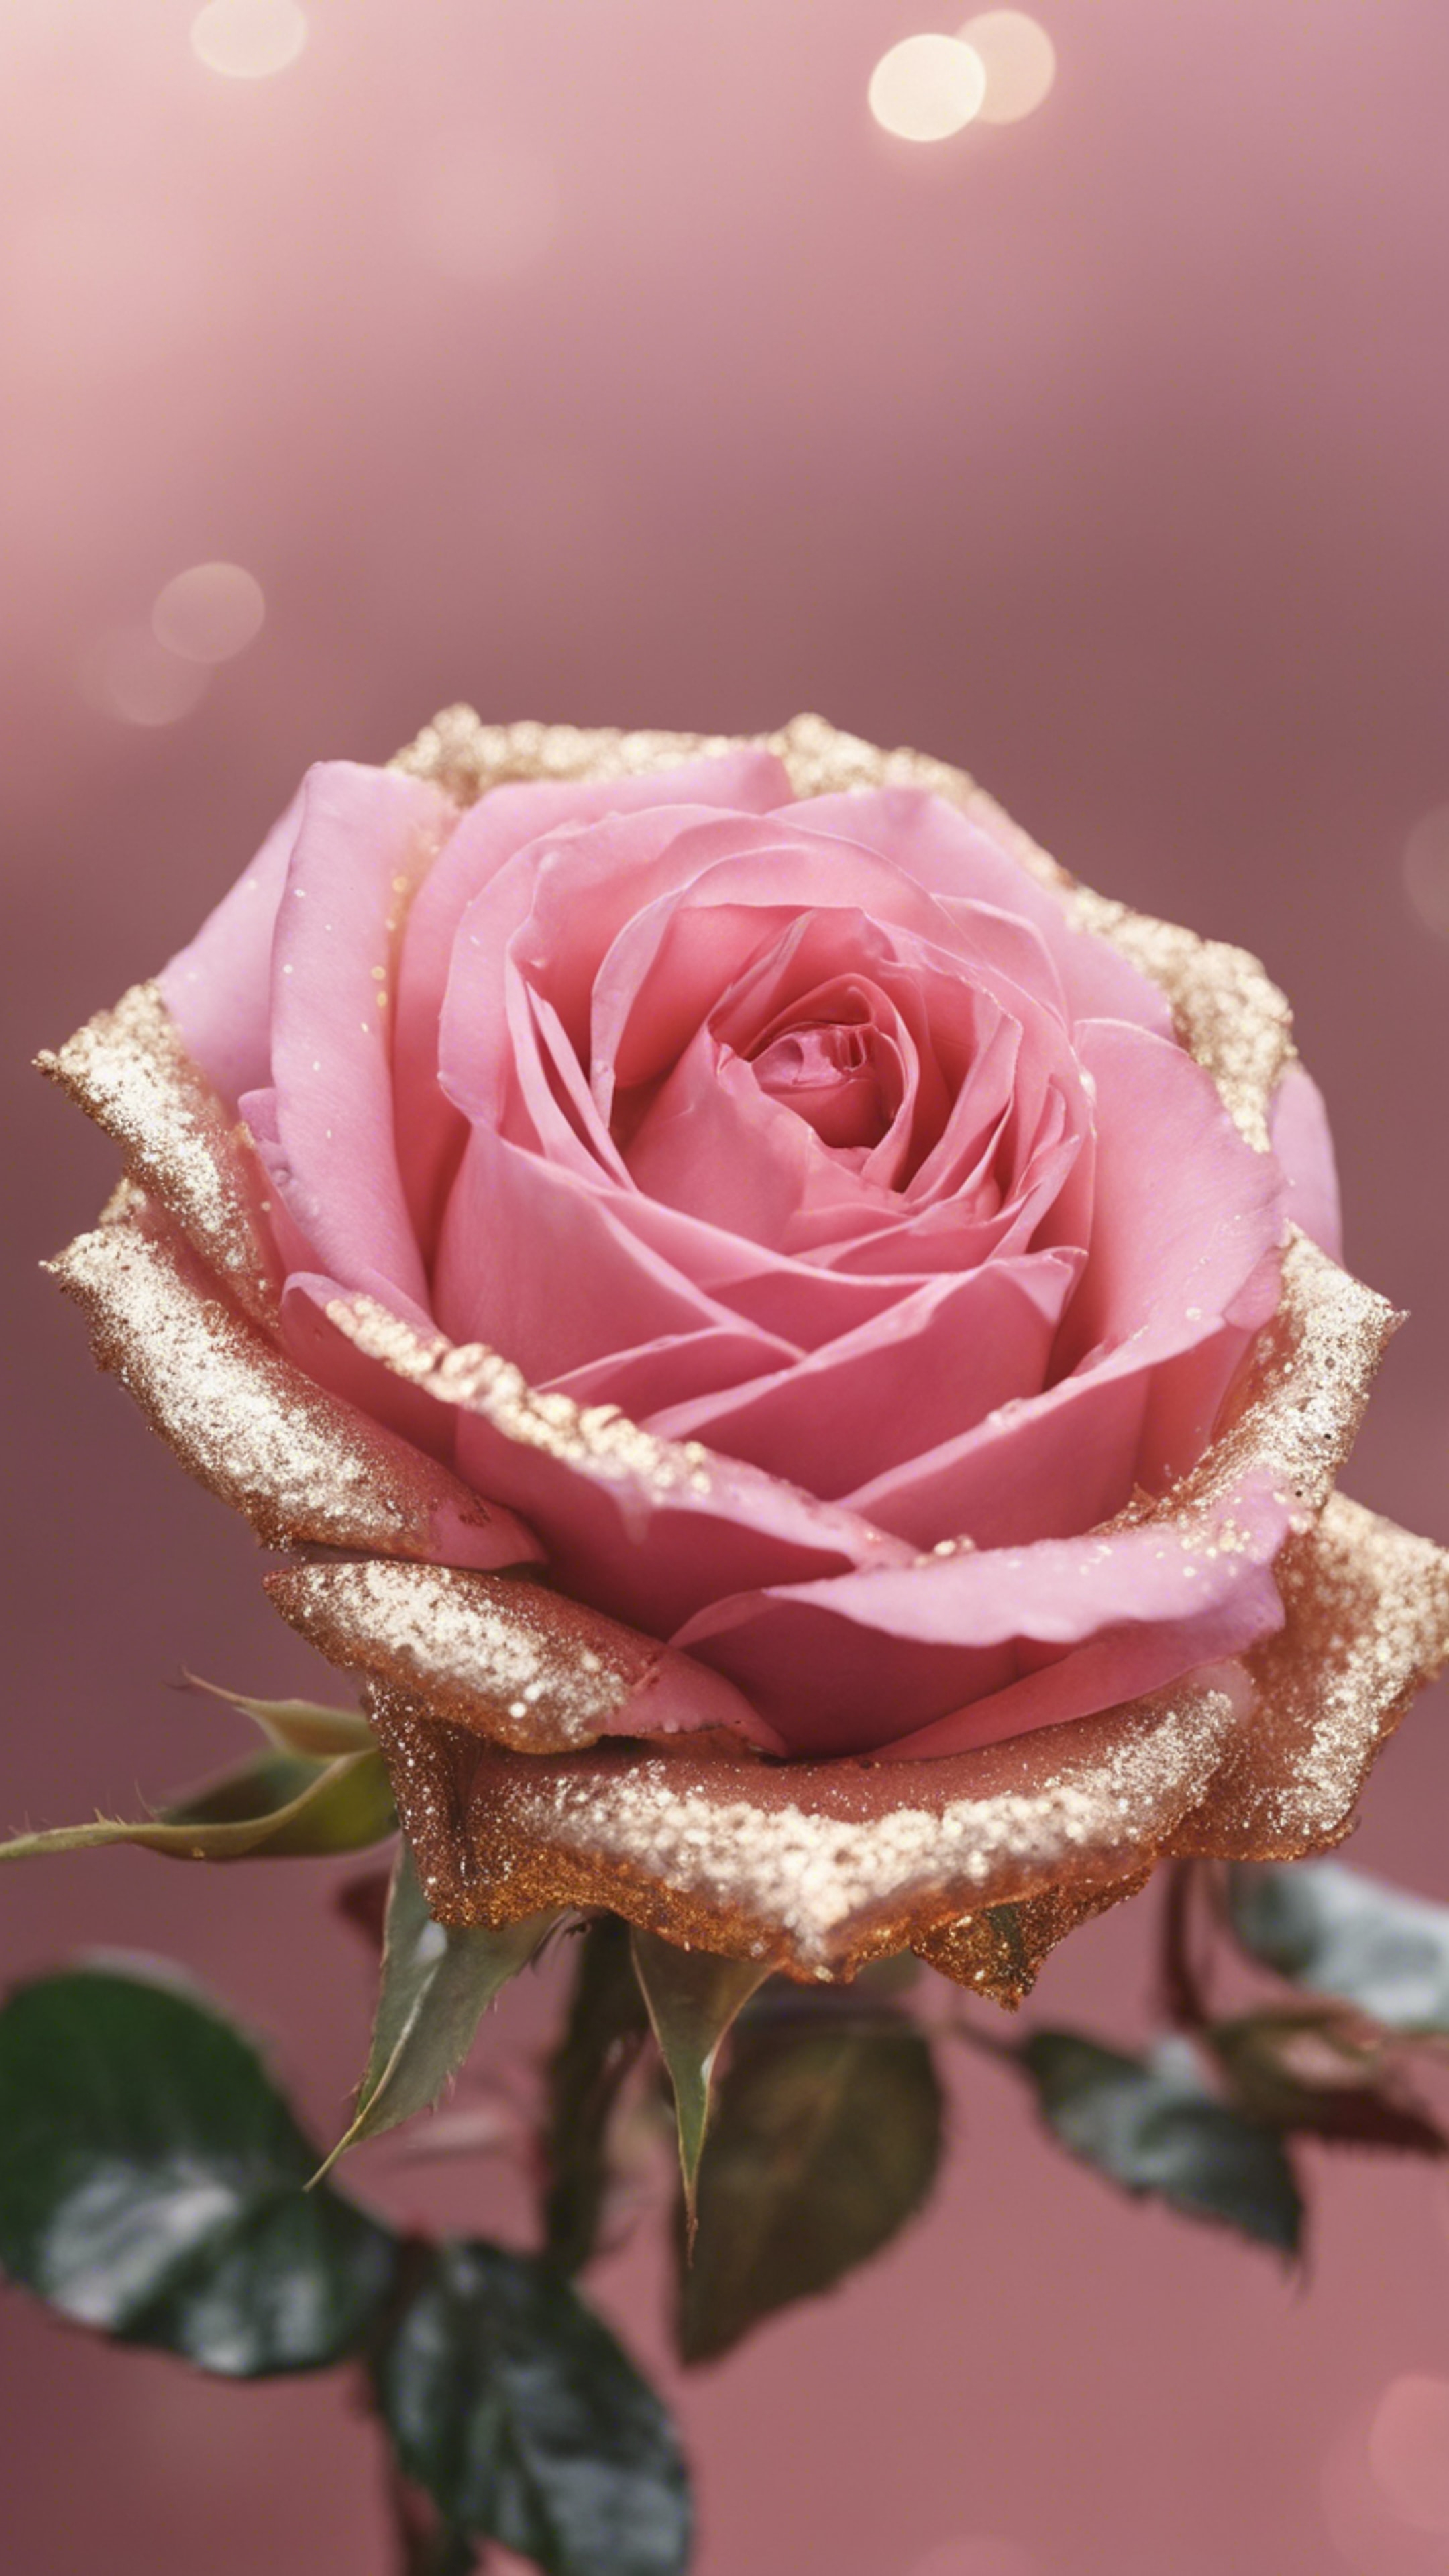 A closeup view of a beautiful pink rose with gold glittered edges.壁紙[3875274ebd404c0da9bb]